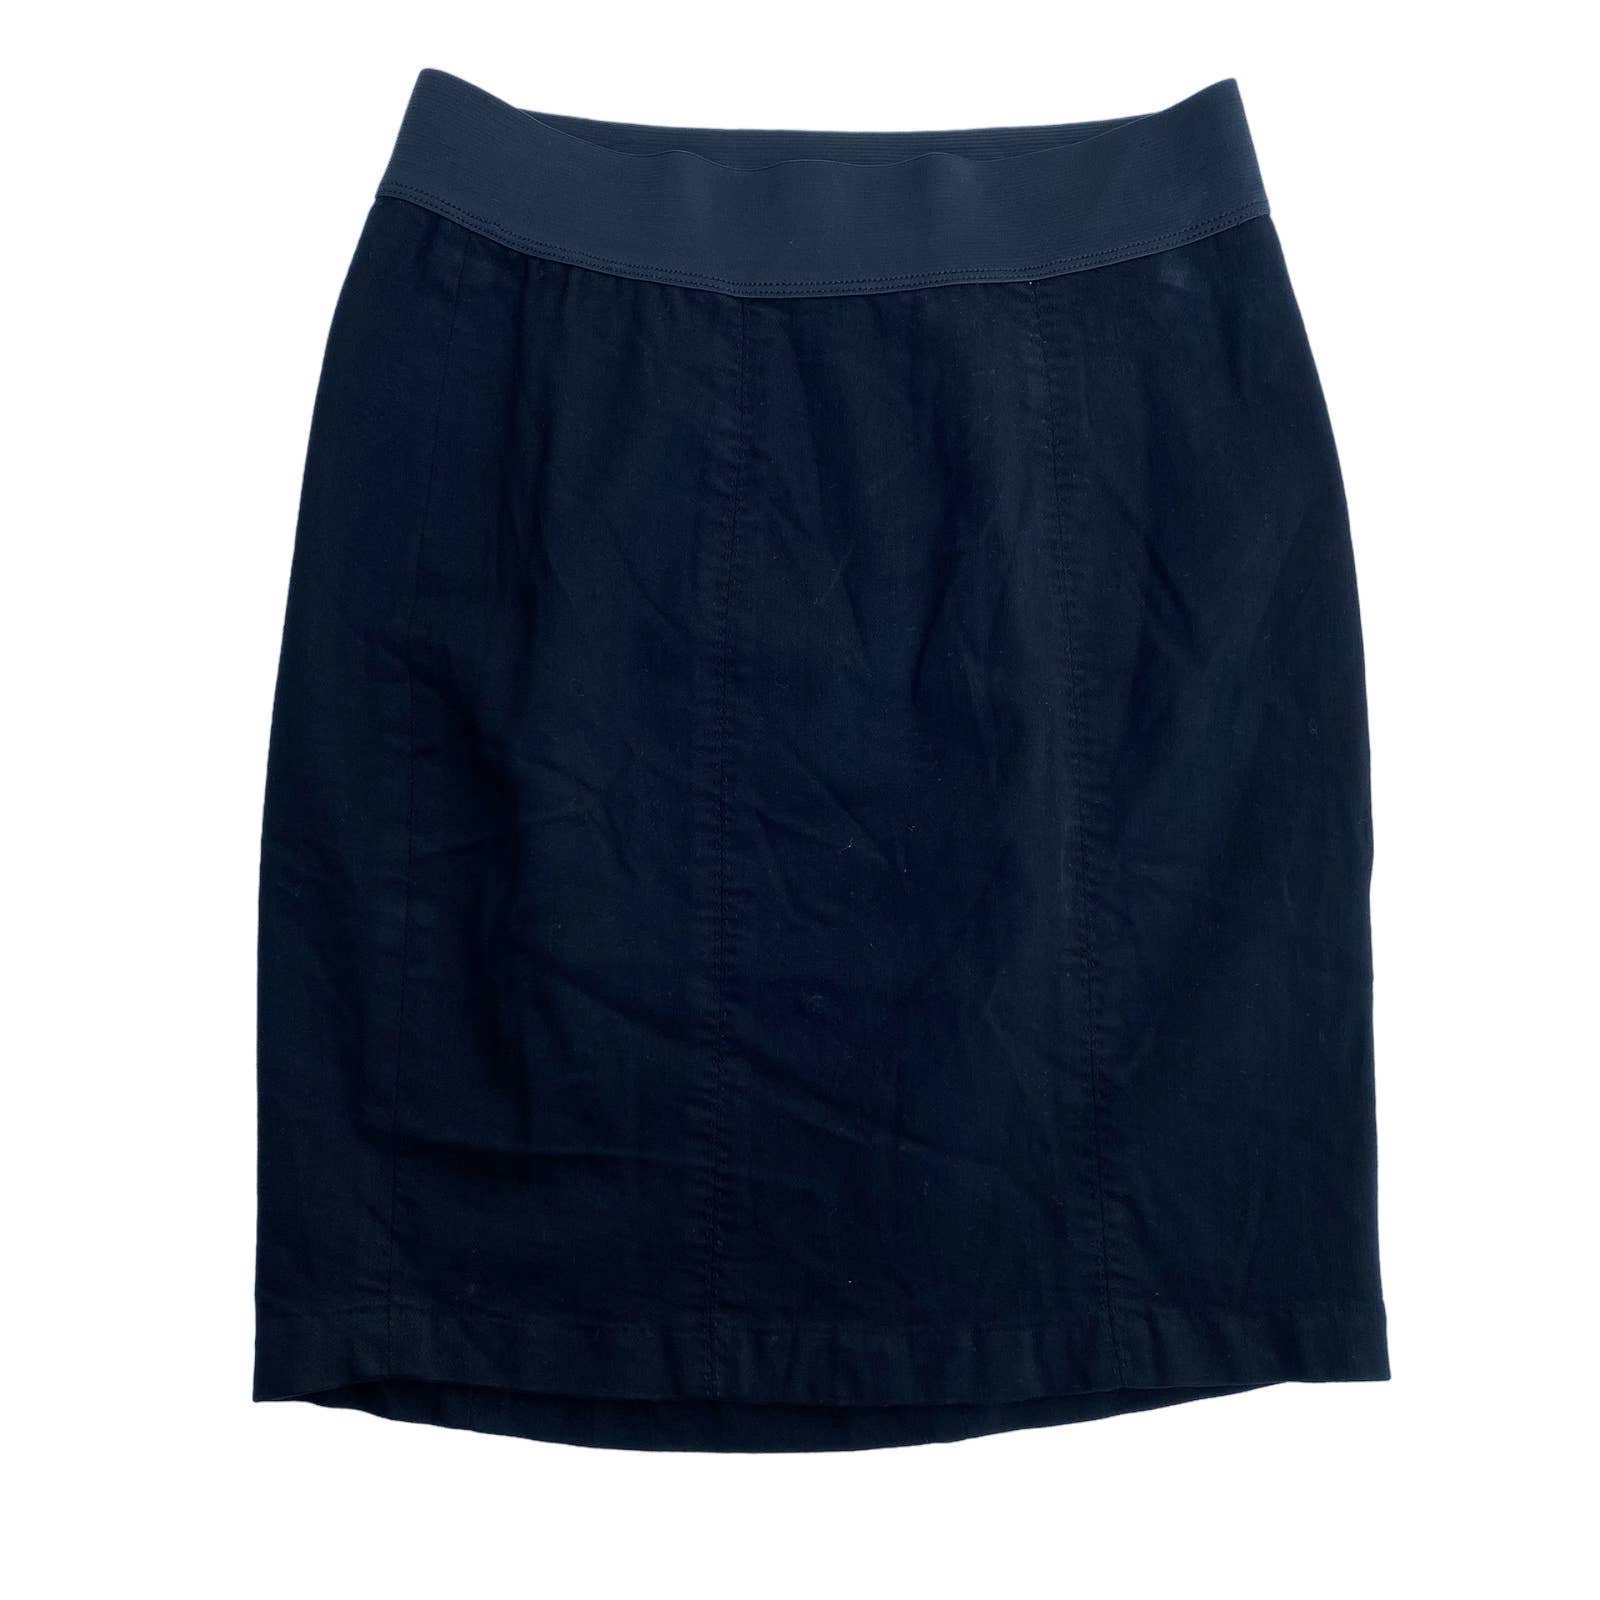 Beautiful New Goldsign Women´s Black Knee Length Stretch Denim Pencil Skirt Size 27 hhJk1W9Ms Online Shop